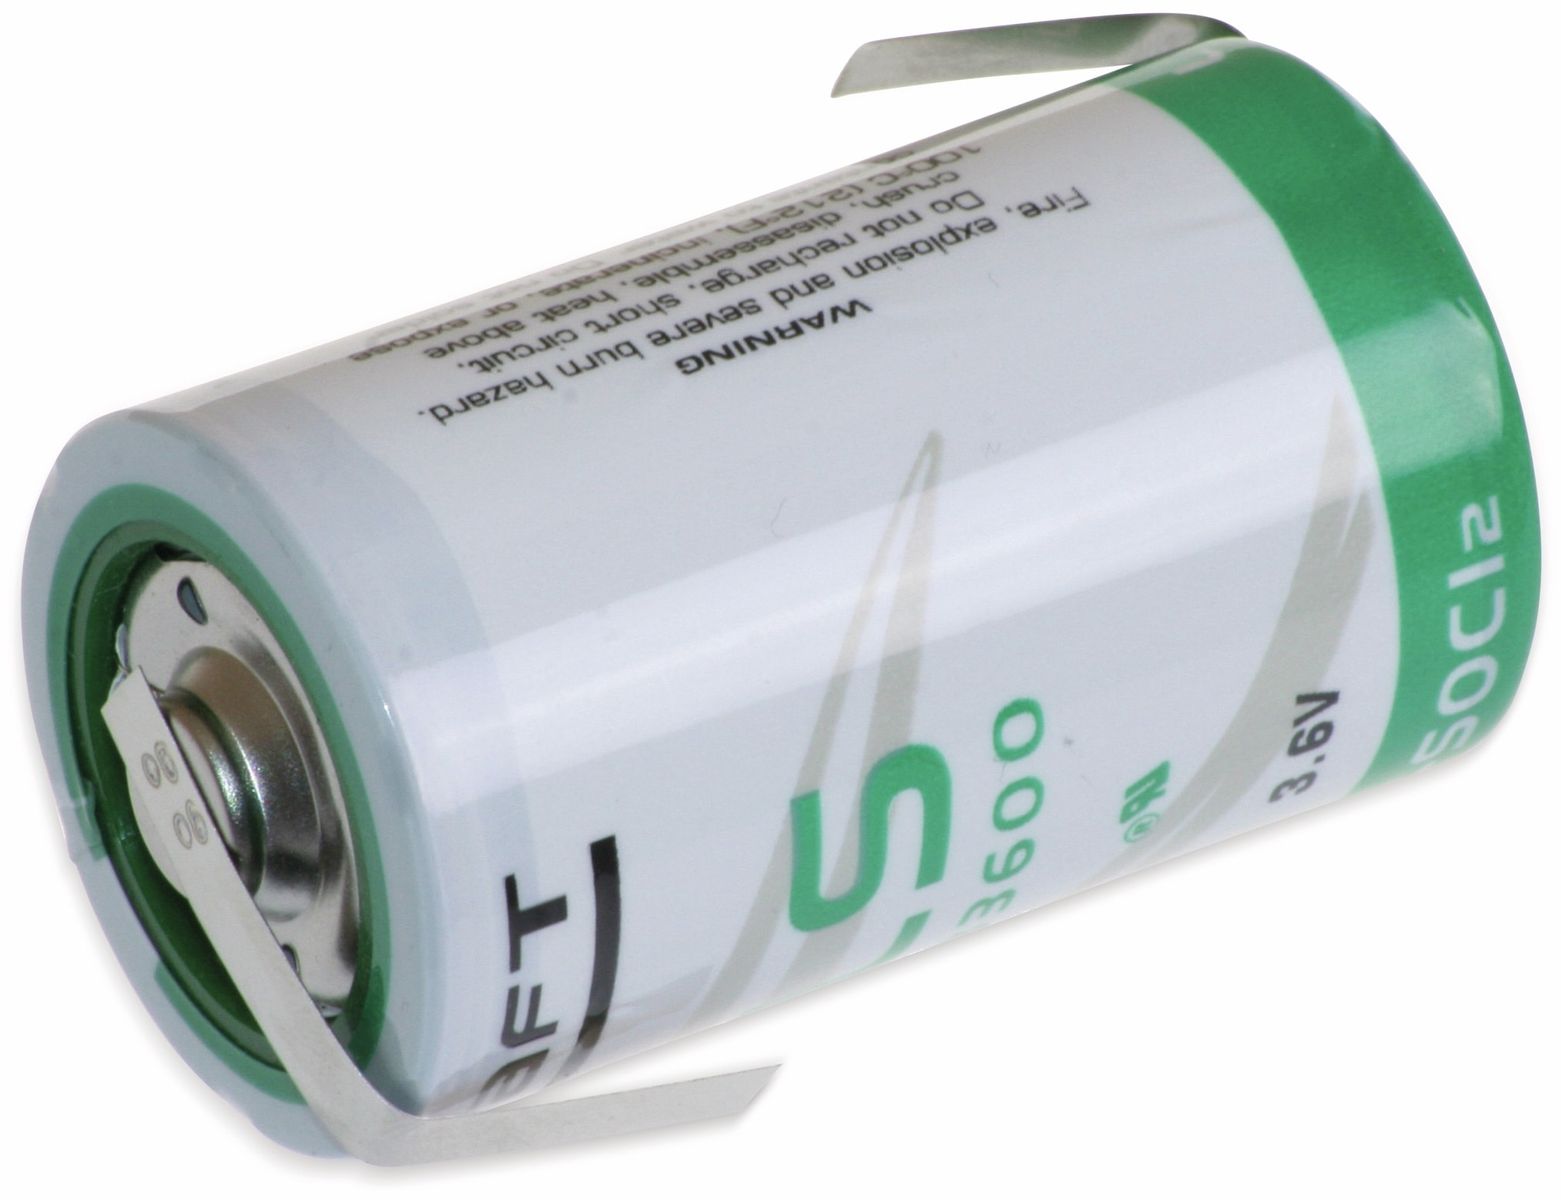 SAFT Lithium-Batterie LS 33600-CNR, D, mit Z-Lötfahne, 3,6 V-, 17000 mAh von SAFT